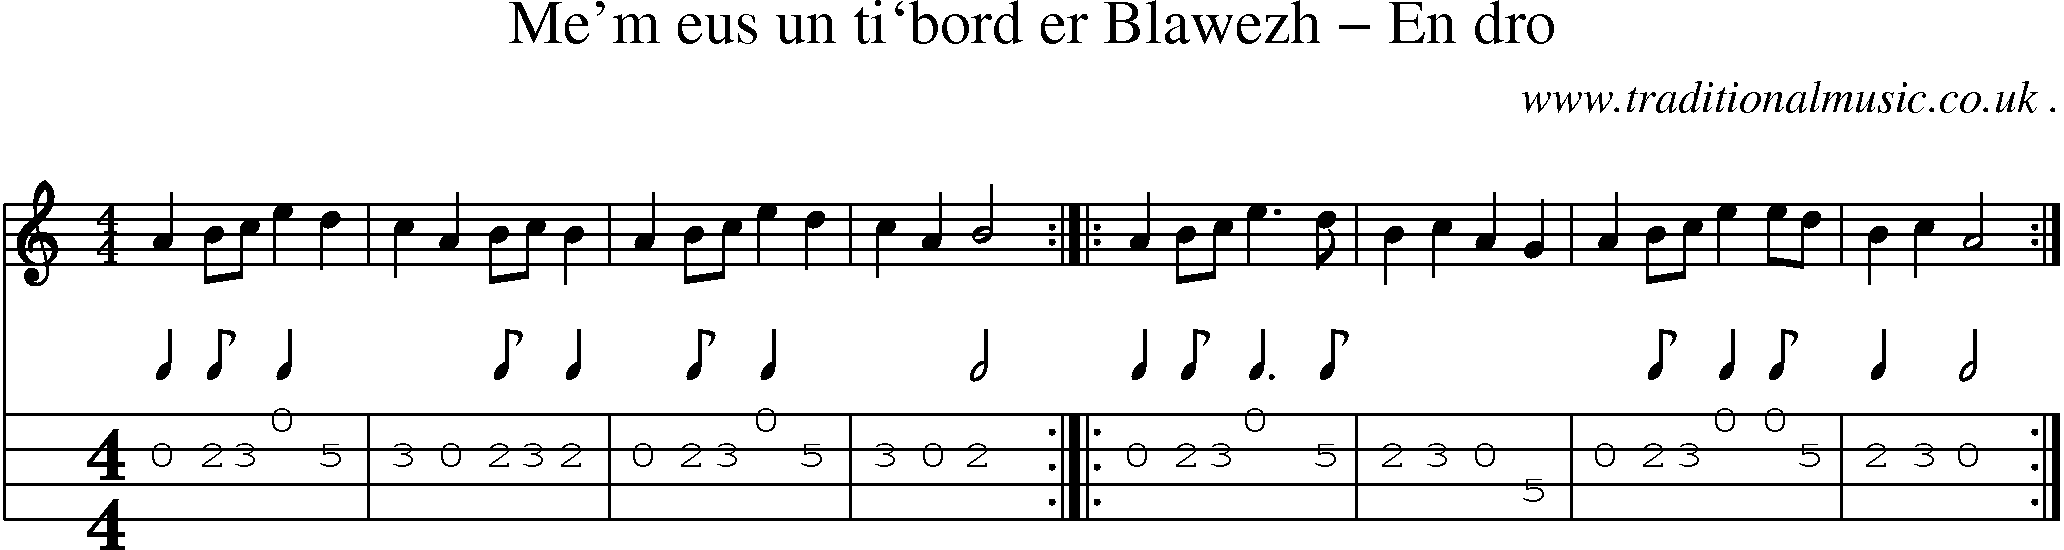 Sheet-Music and Mandolin Tabs for Mem Eus Un Ti`bord Er Blawezh En Dro